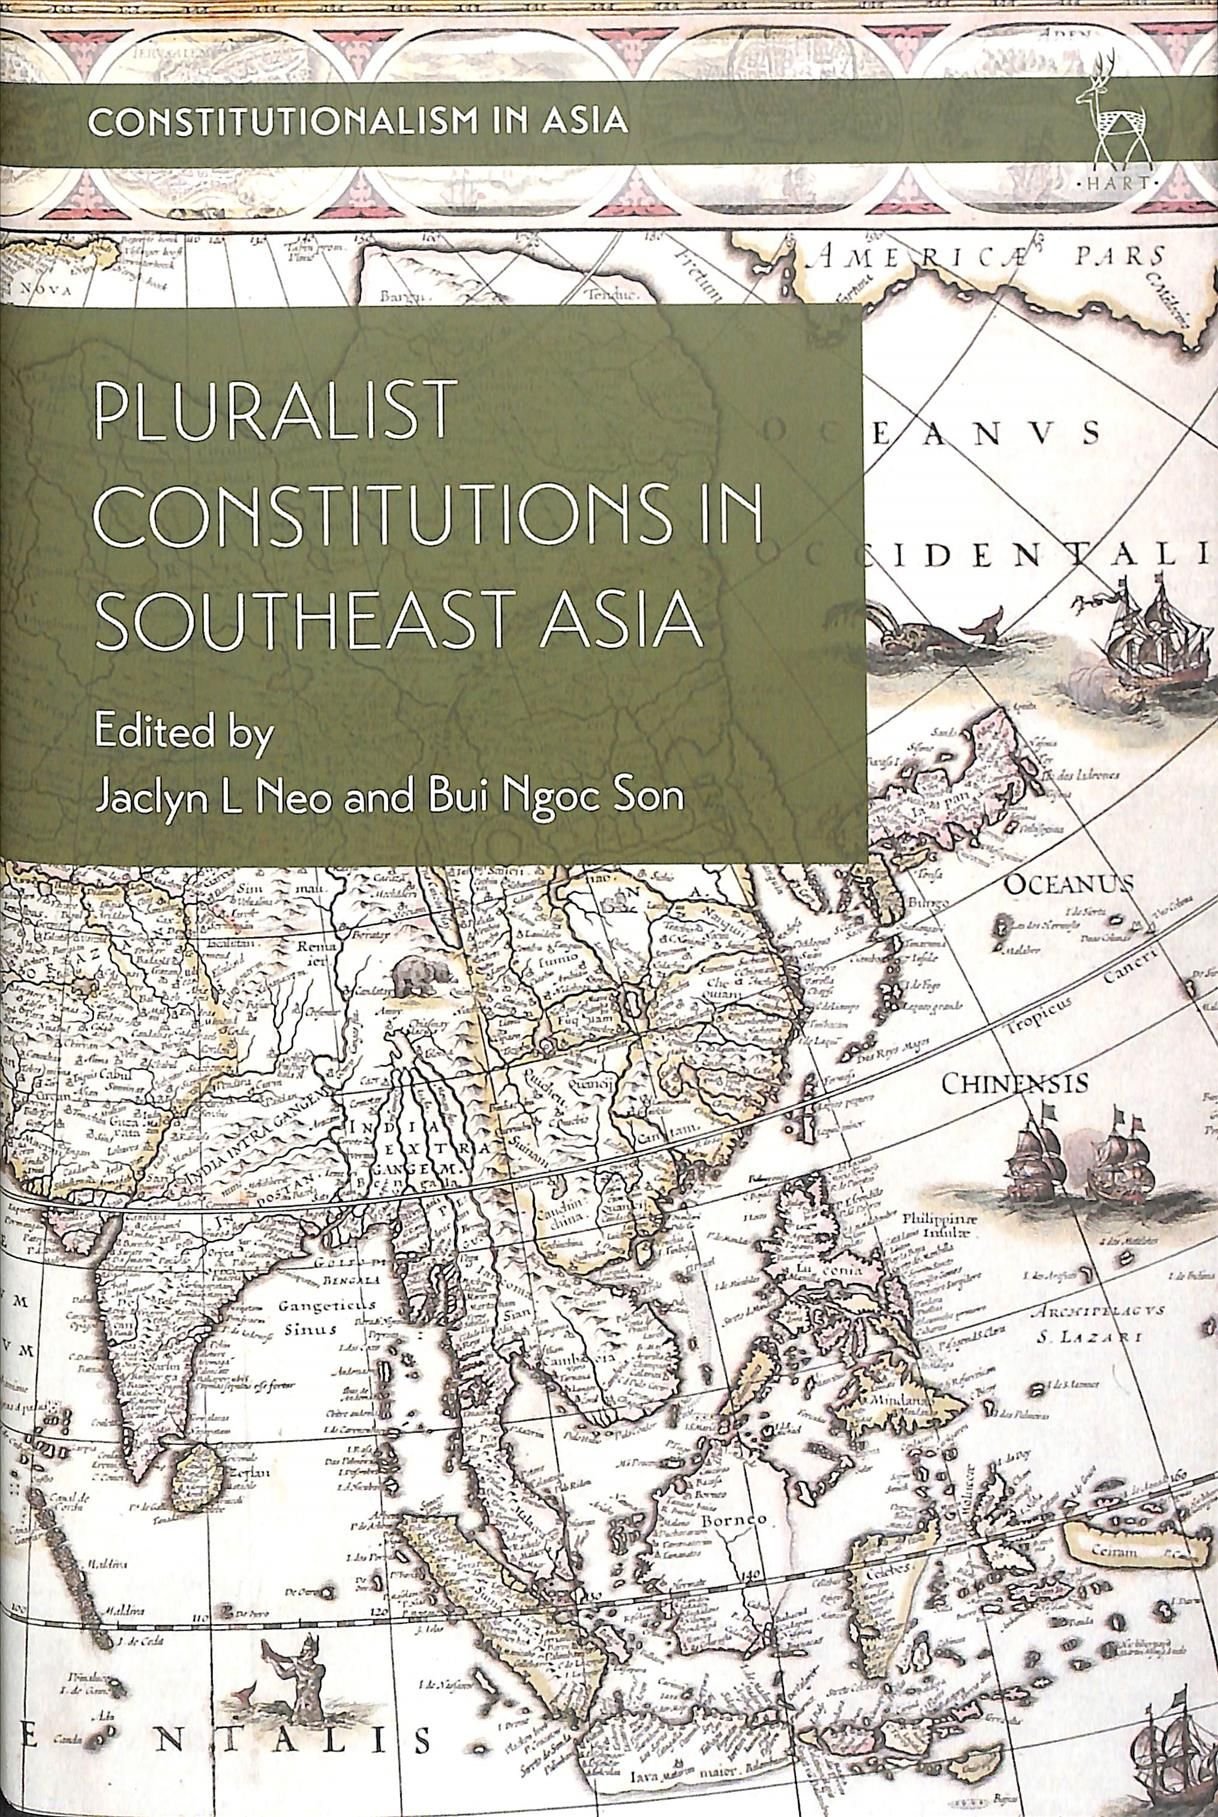 Pluralist Constitutions in Southeast Asia